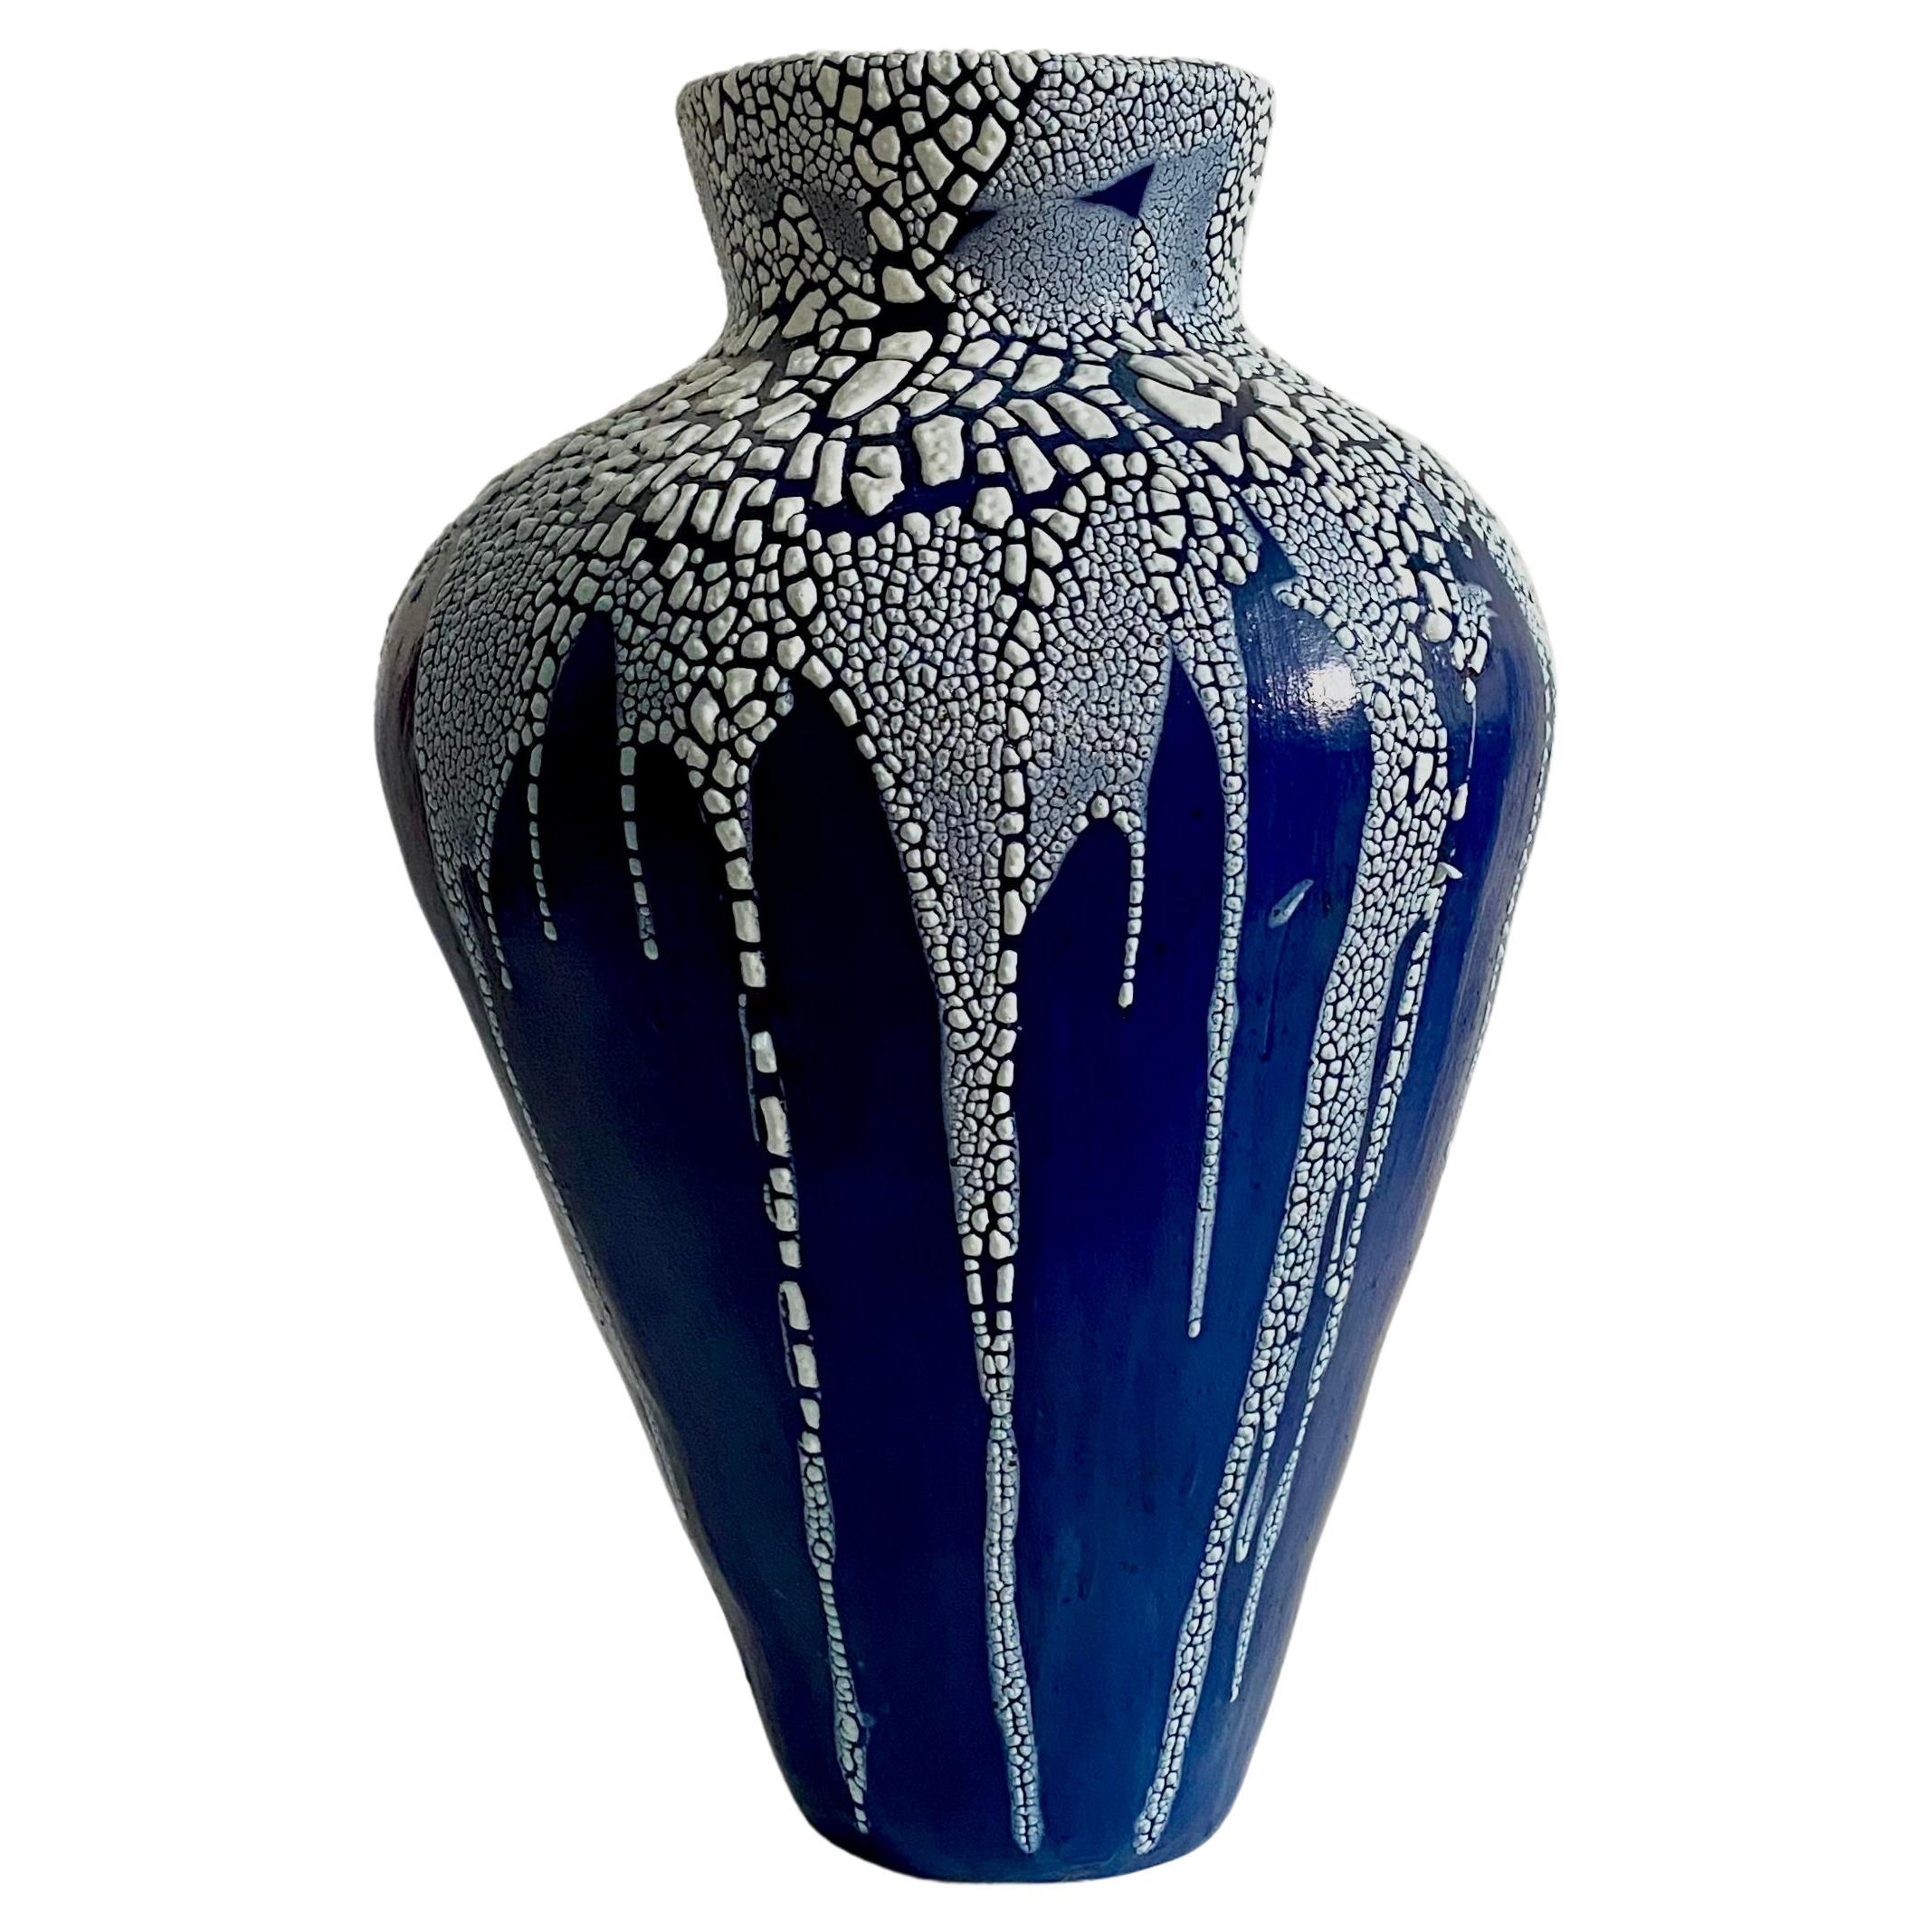 Dripping Vase by Astrid Öhman